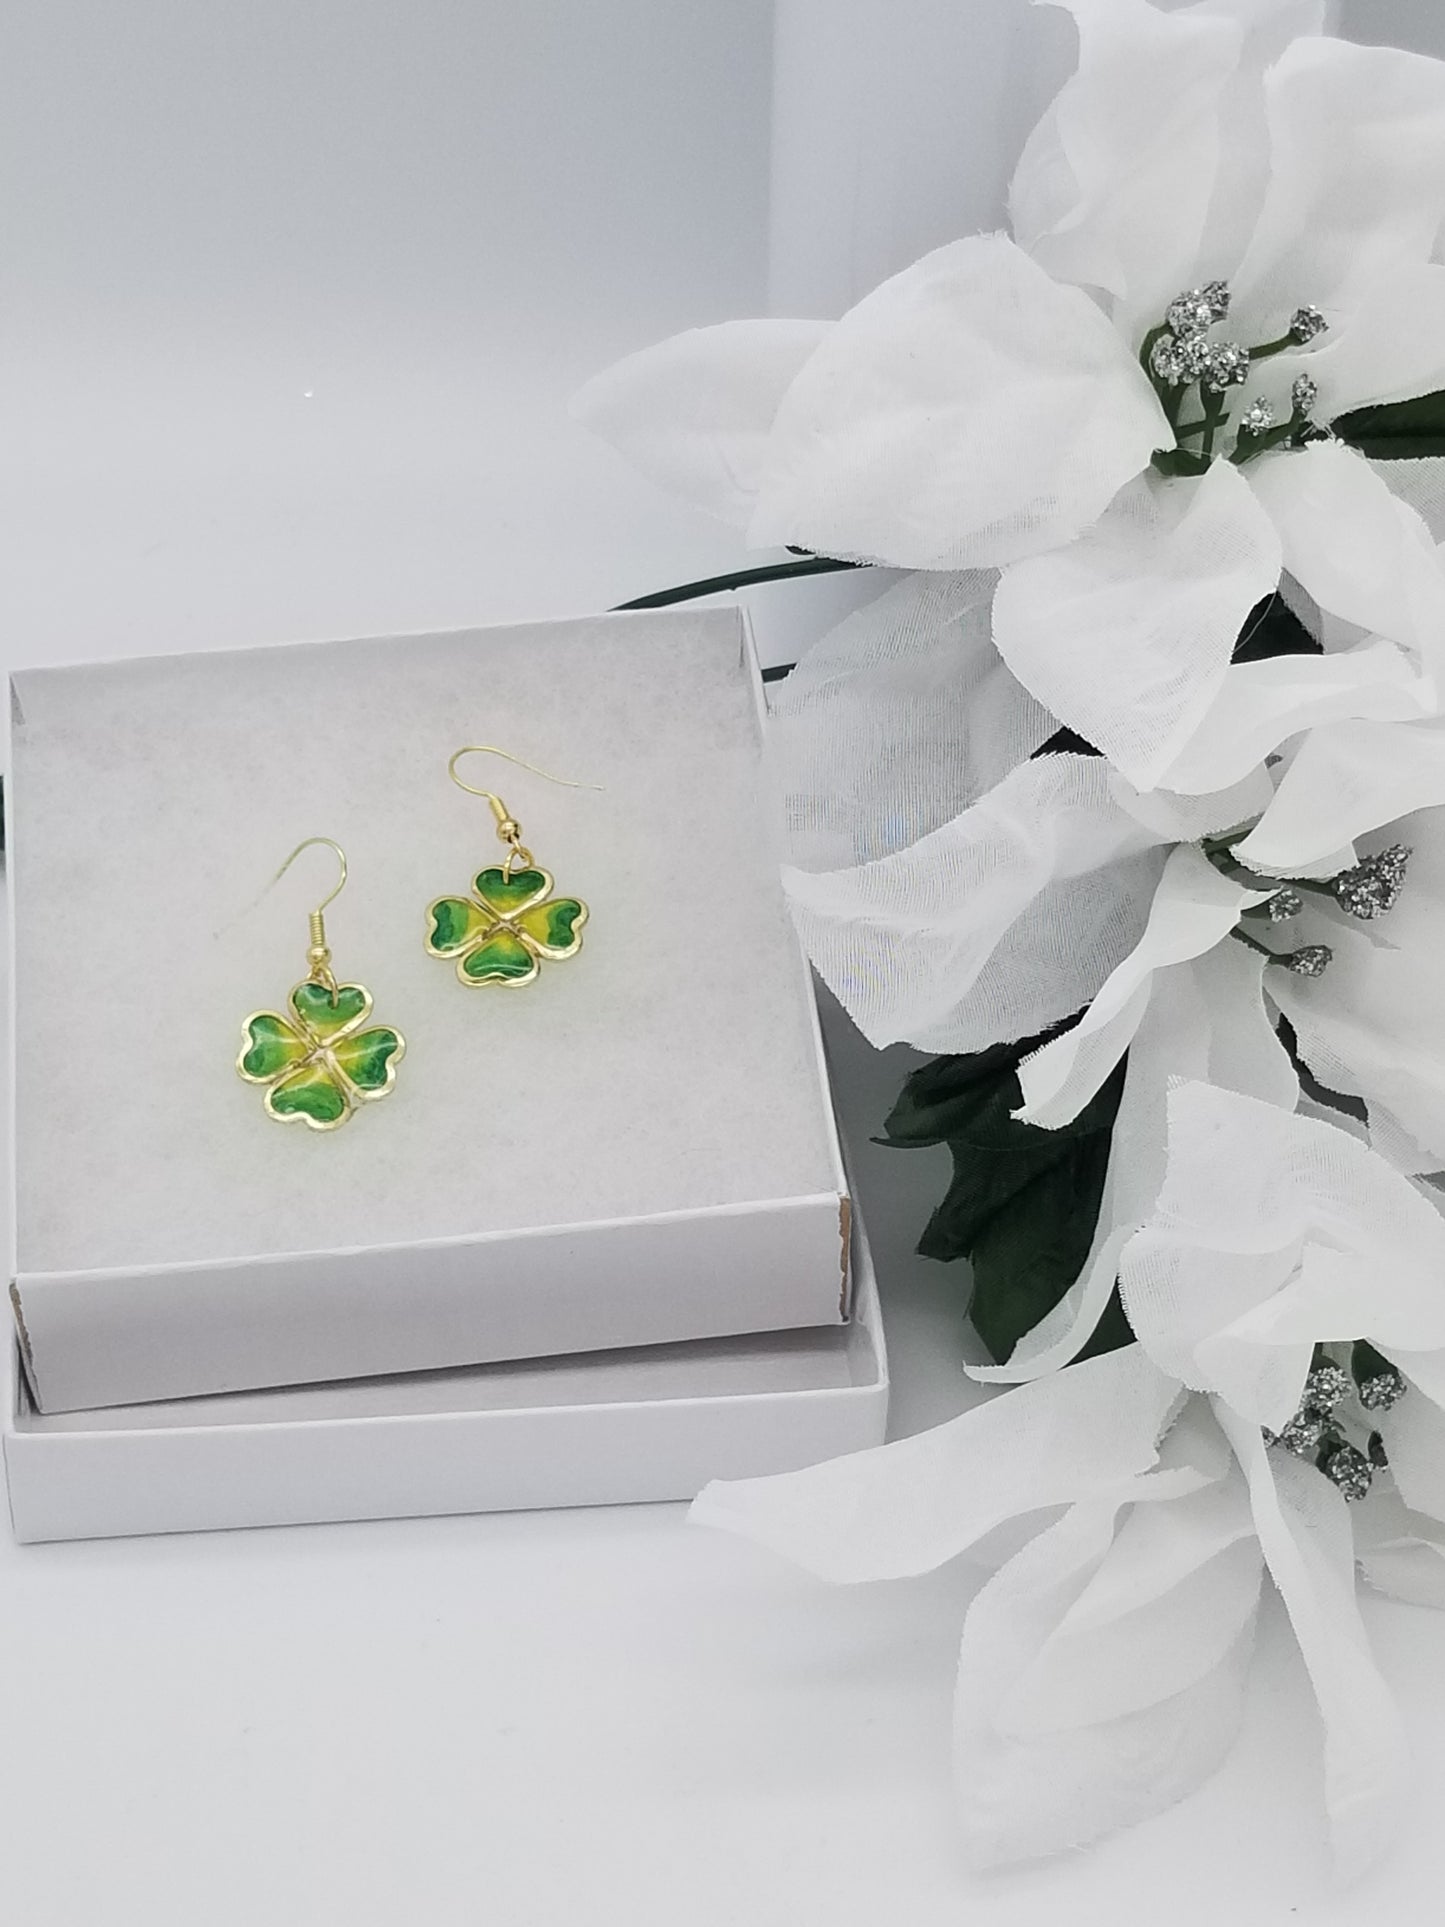 Gold Four Leaf Clover Earrings| St Patrick's Day Earrings| | Shamrock Earrings| Clover Earrings| Resin Earrings Dangle Earrings